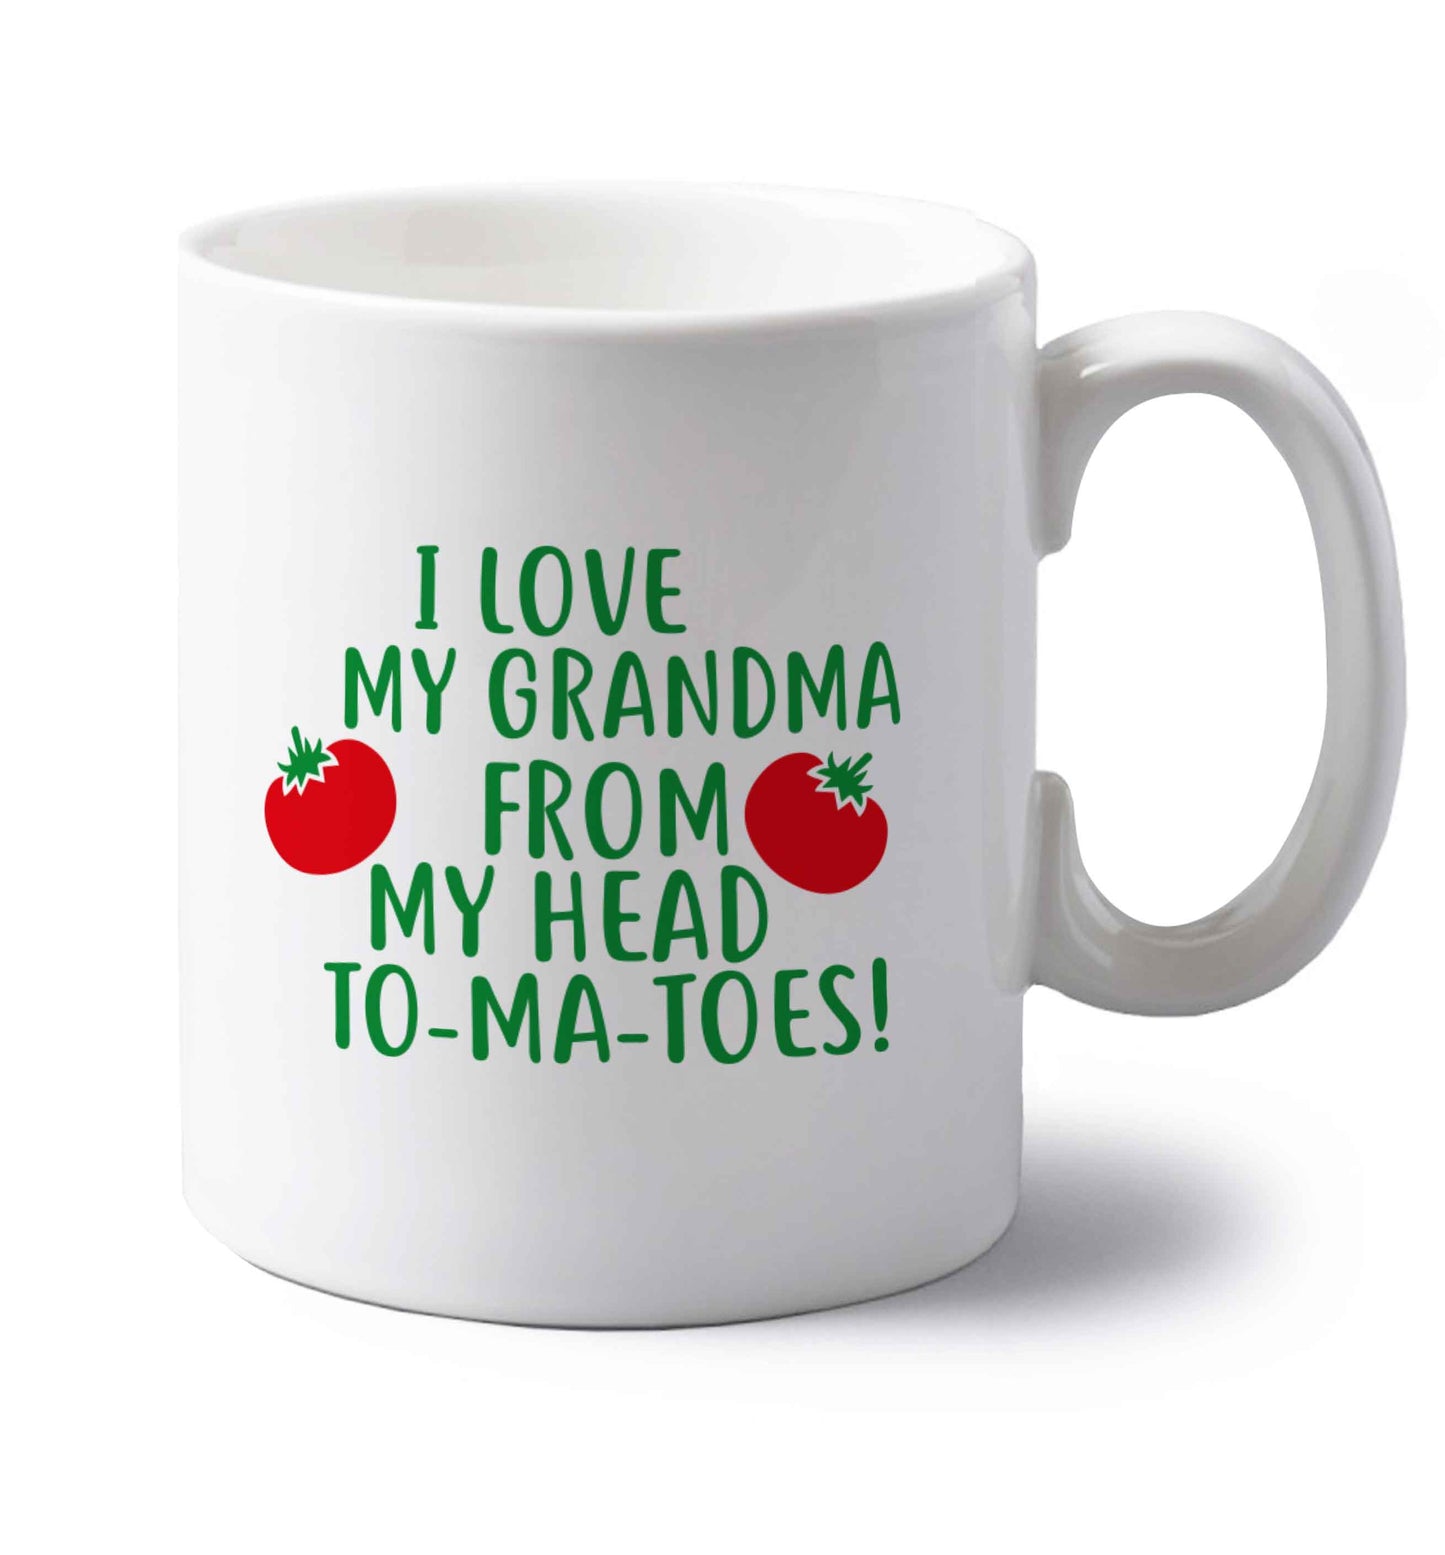 I love my grandma from my head to-ma-toes left handed white ceramic mug 